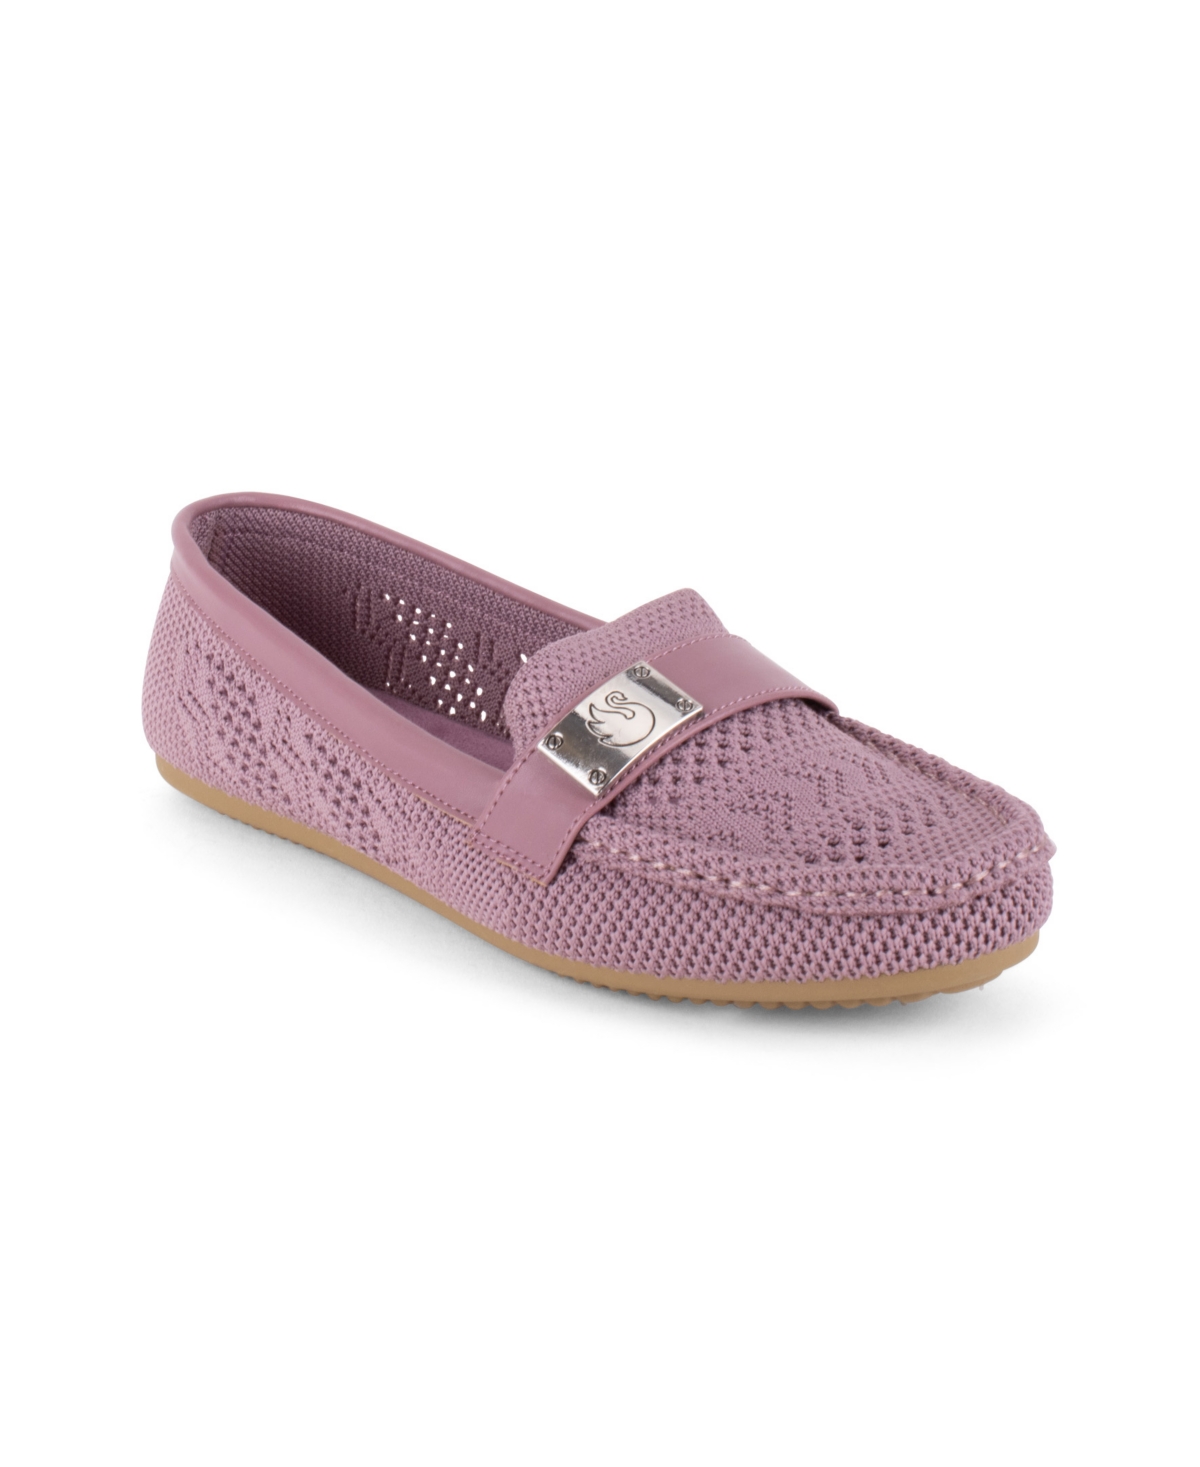 Women's Evelyn Knit Slip-On Loafers - Lavender